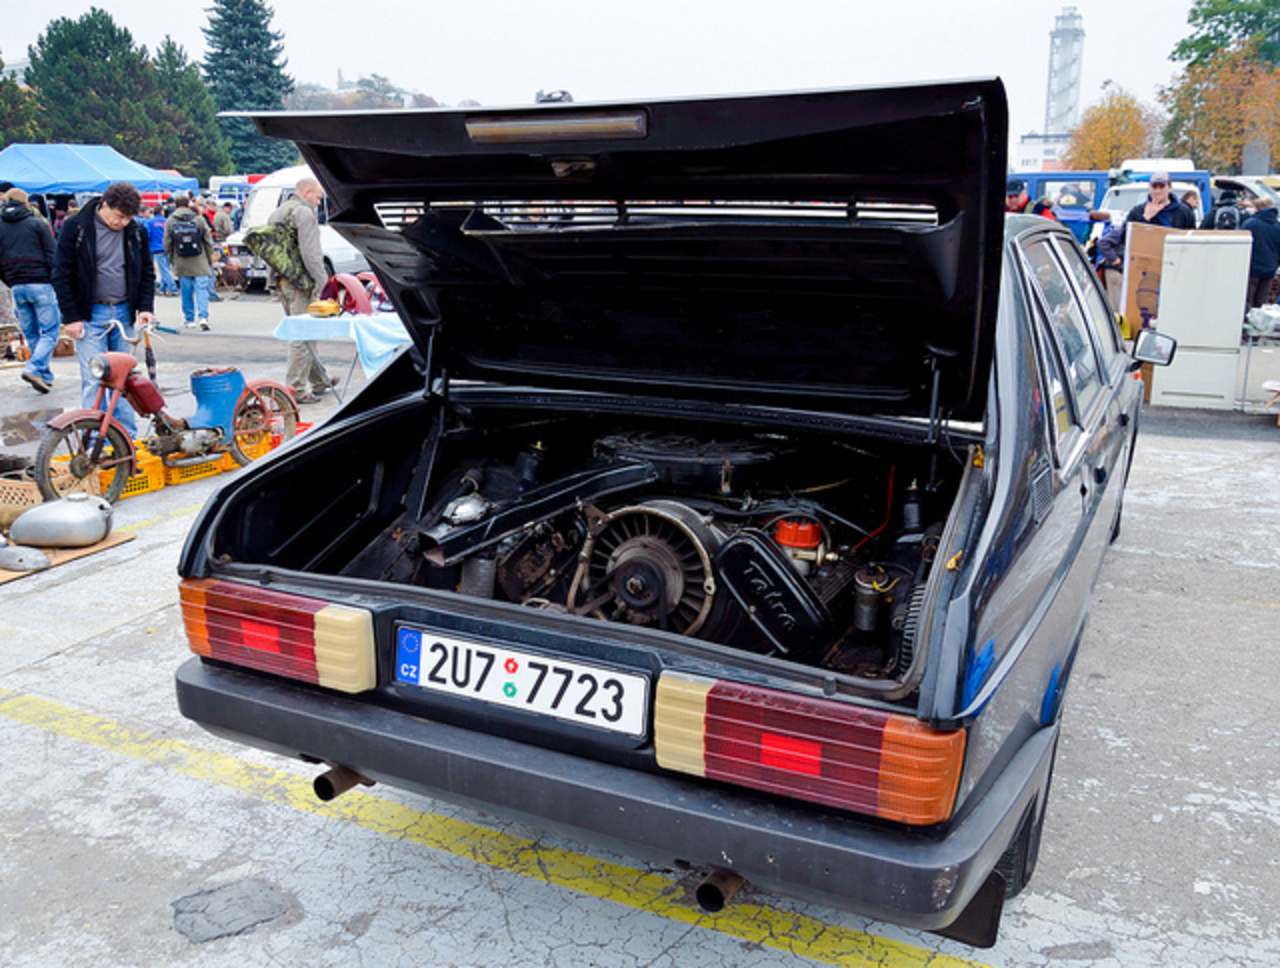 Tatra 613 engine | Flickr - Photo Sharing!